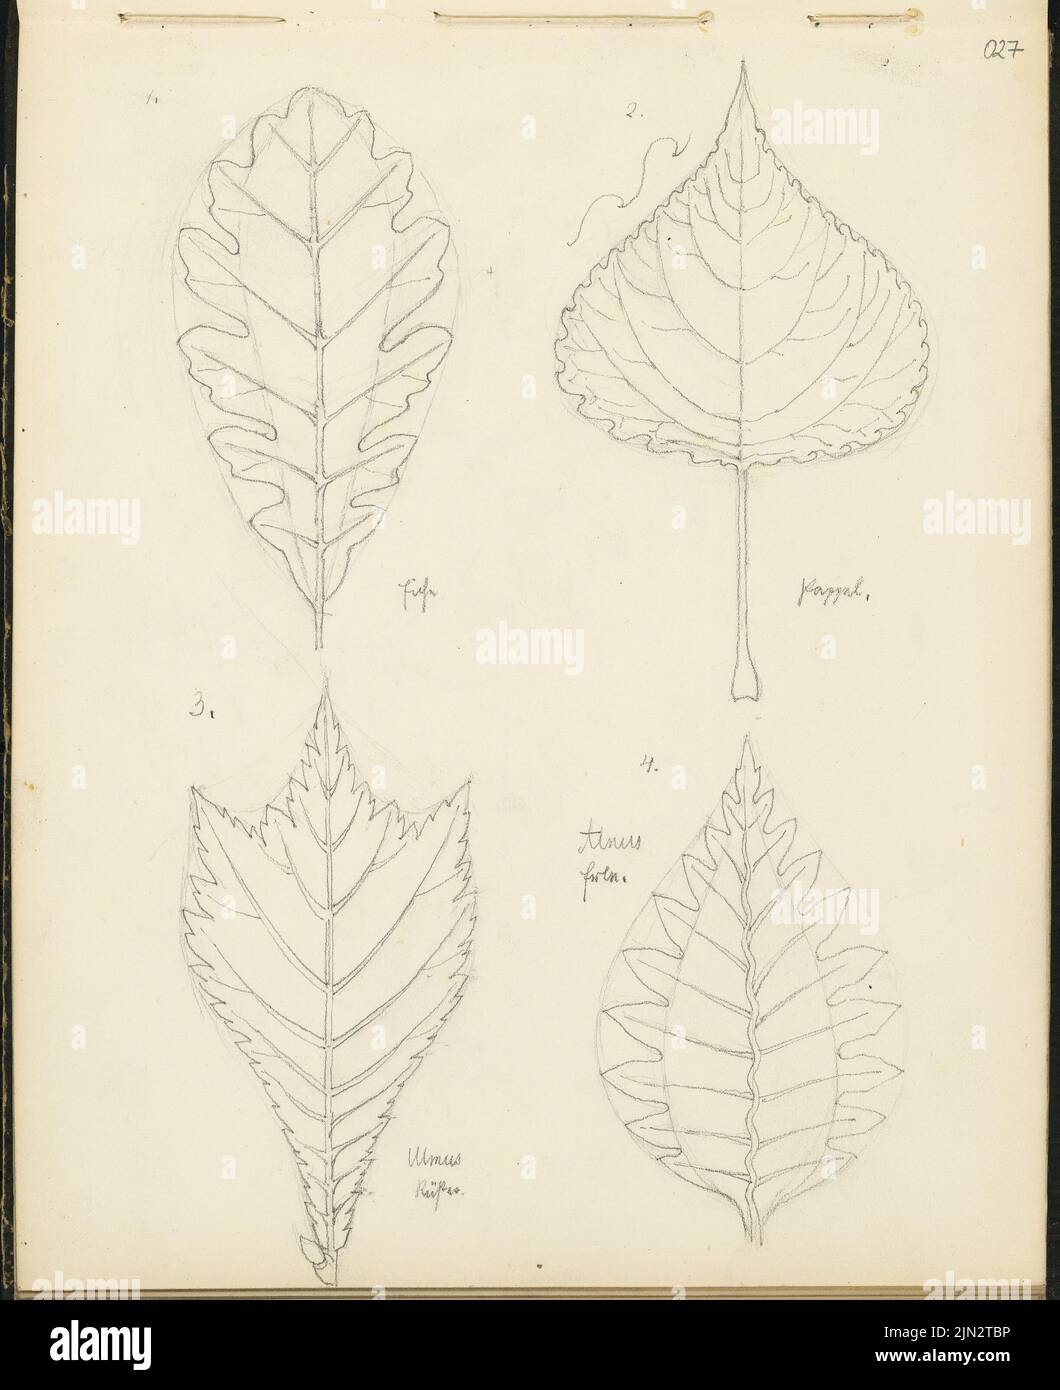 Sketchbook 4: Ornament and architectural studies, 1. Oak, 2. Pappel, 3. Ulmus Rüster, 4. Alnus f […] Stock Photo